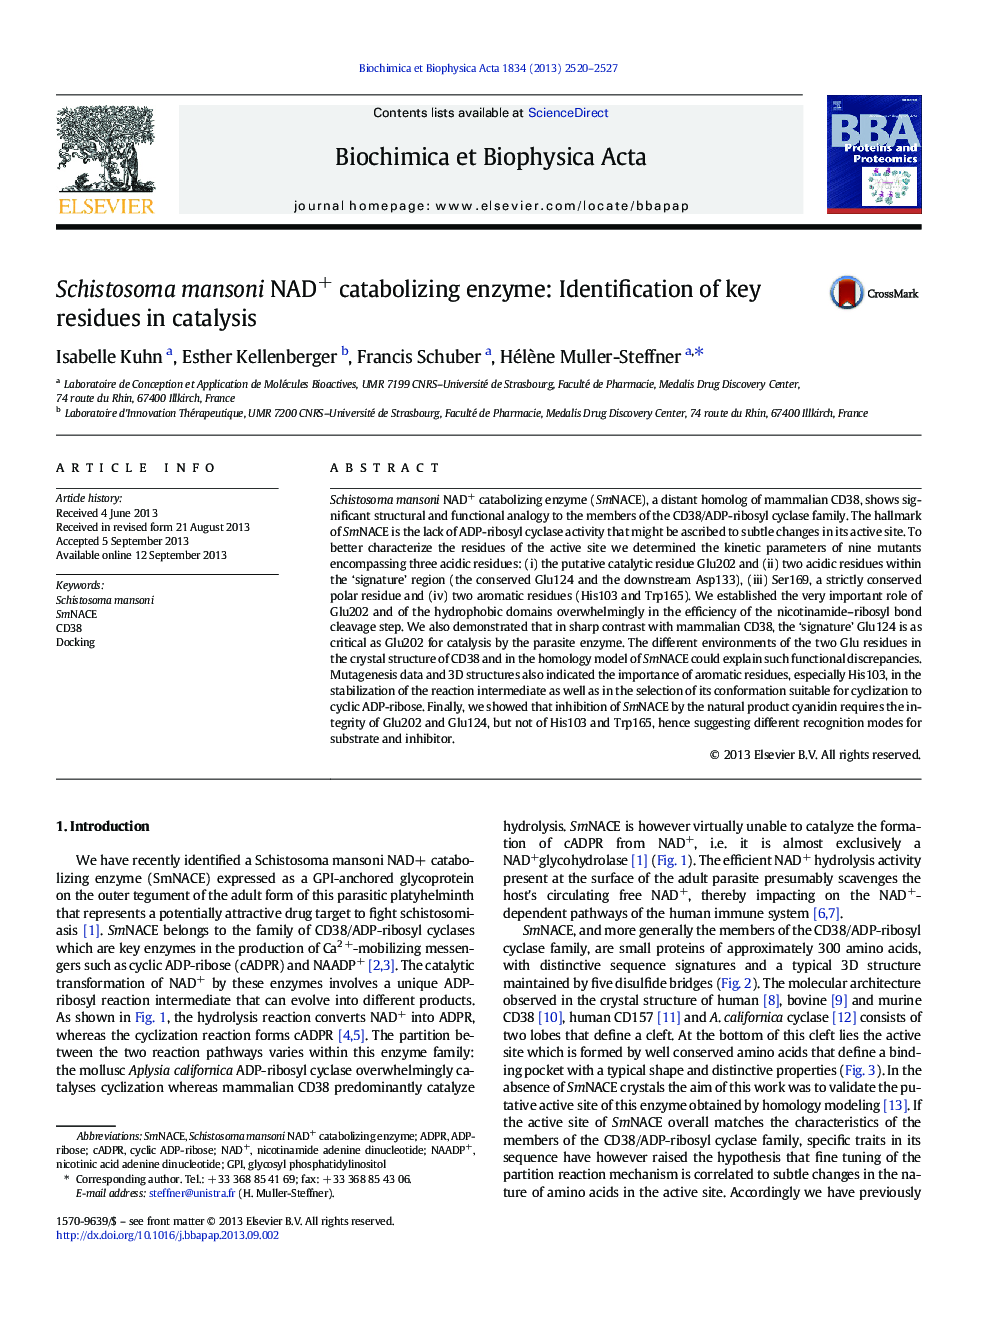 Schistosoma mansoni NAD+ catabolizing enzyme: Identification of key residues in catalysis